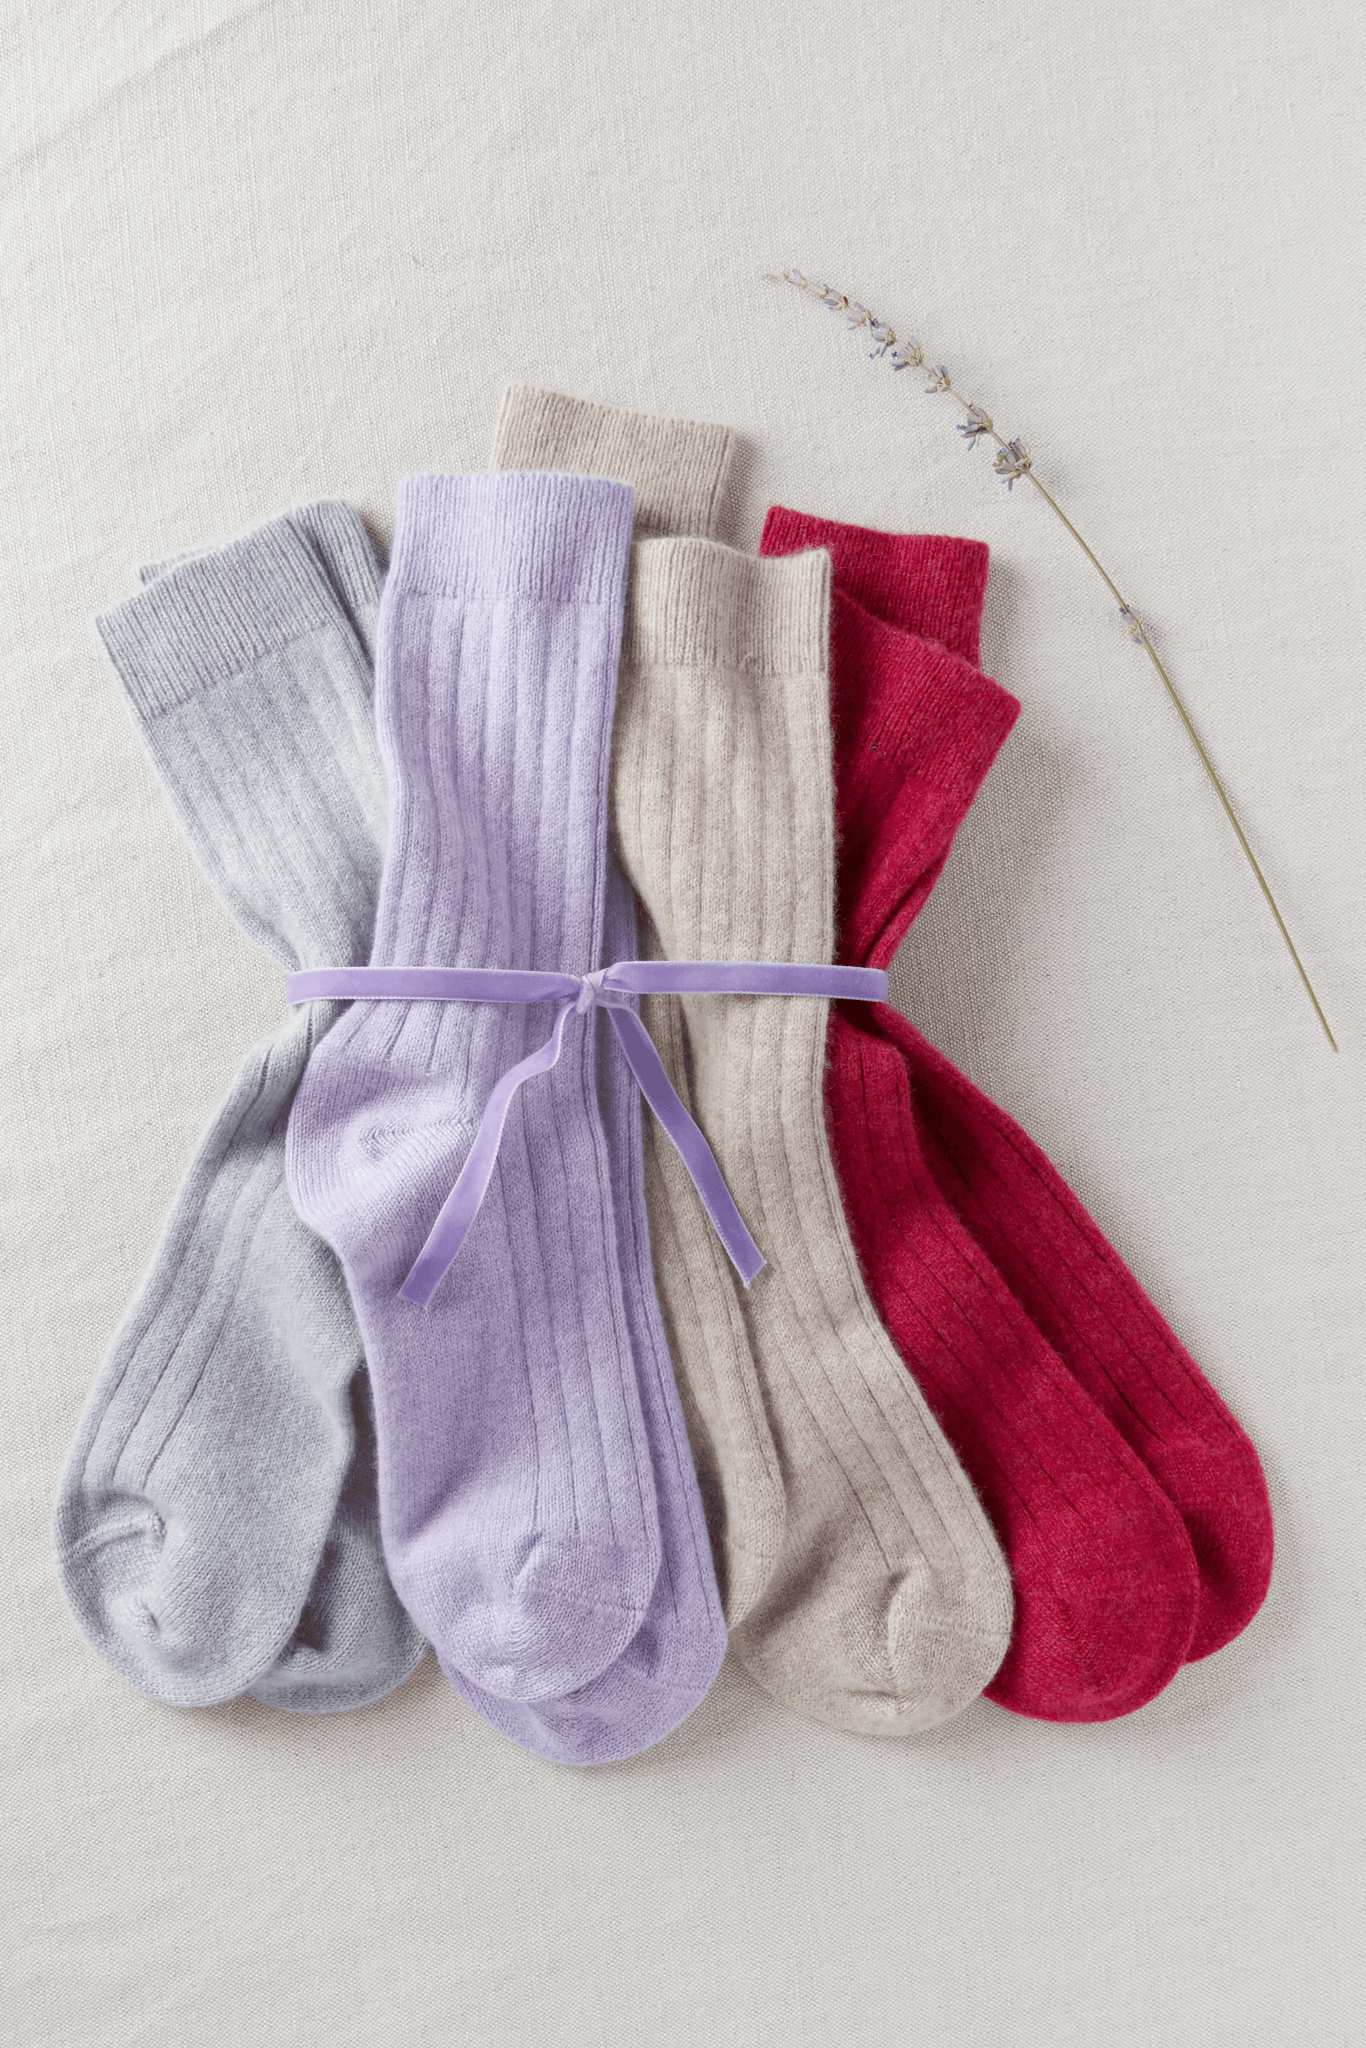 Soft Scottish Cashmere Women's Socks - Comfortable Lavender Socks Lavender Hill Clothing - Cozy Bed Socks